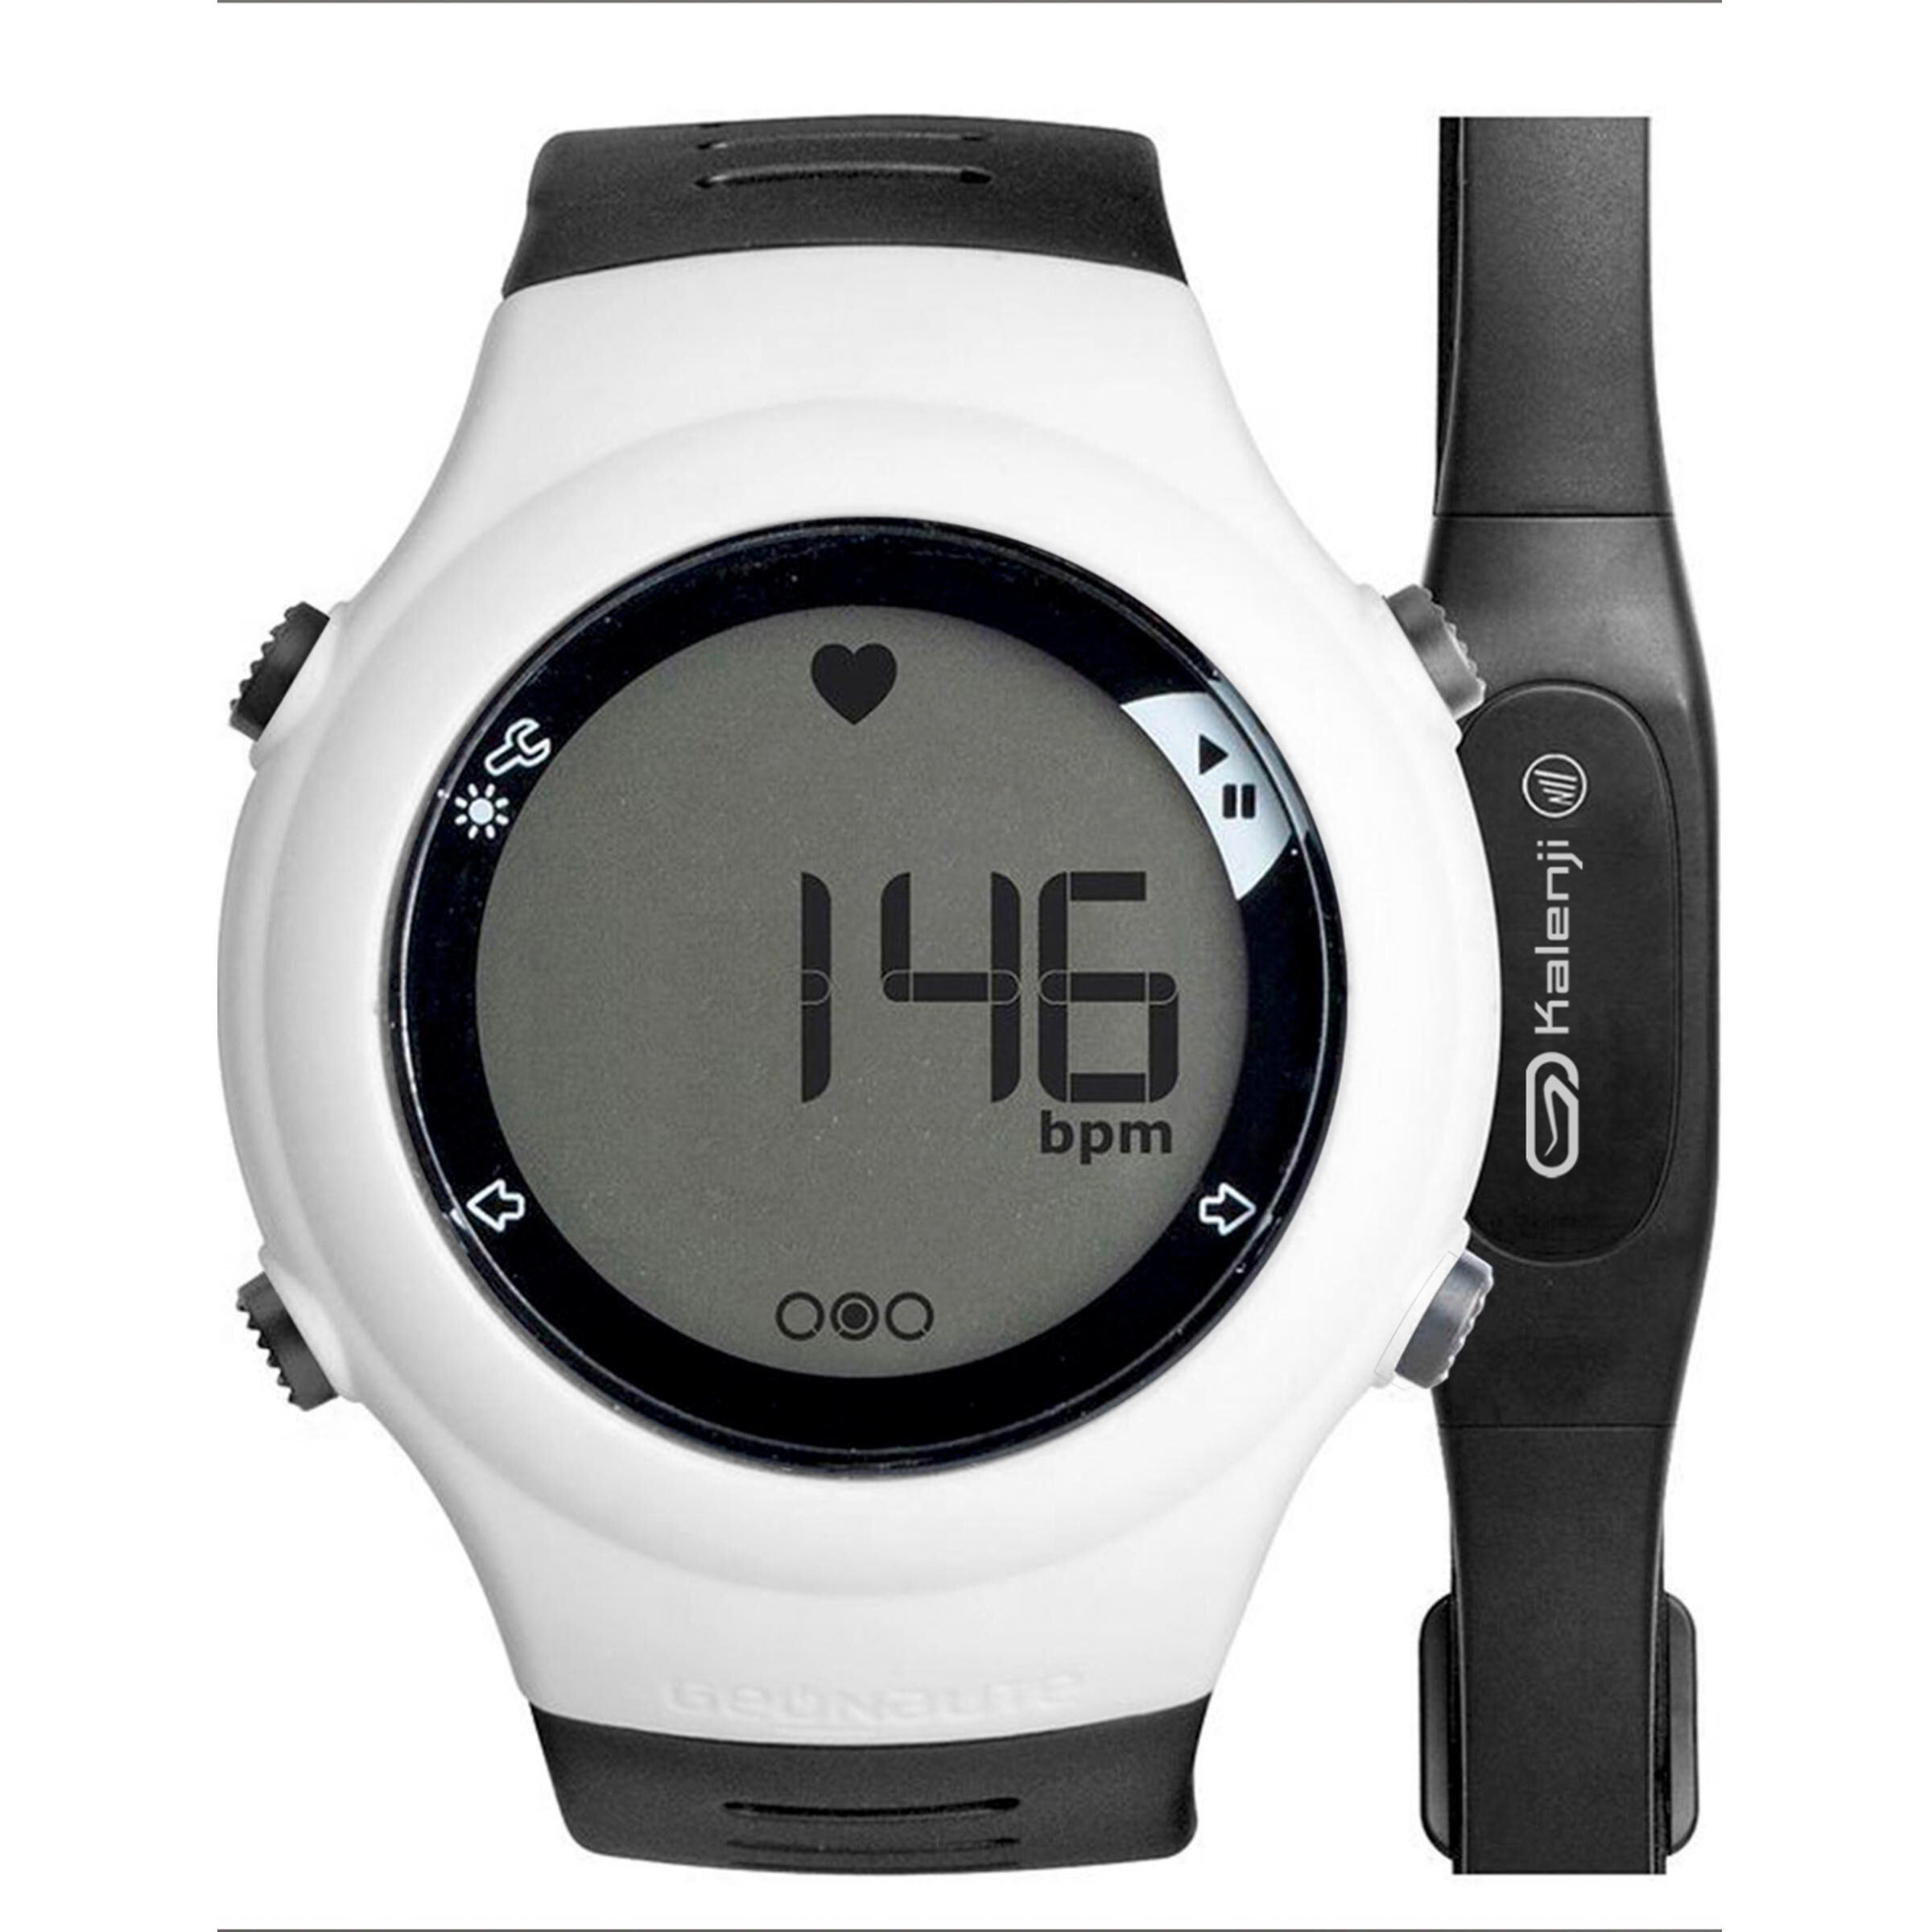 KALENJI ONRHYTHM 110 running heart rate monitor watch white